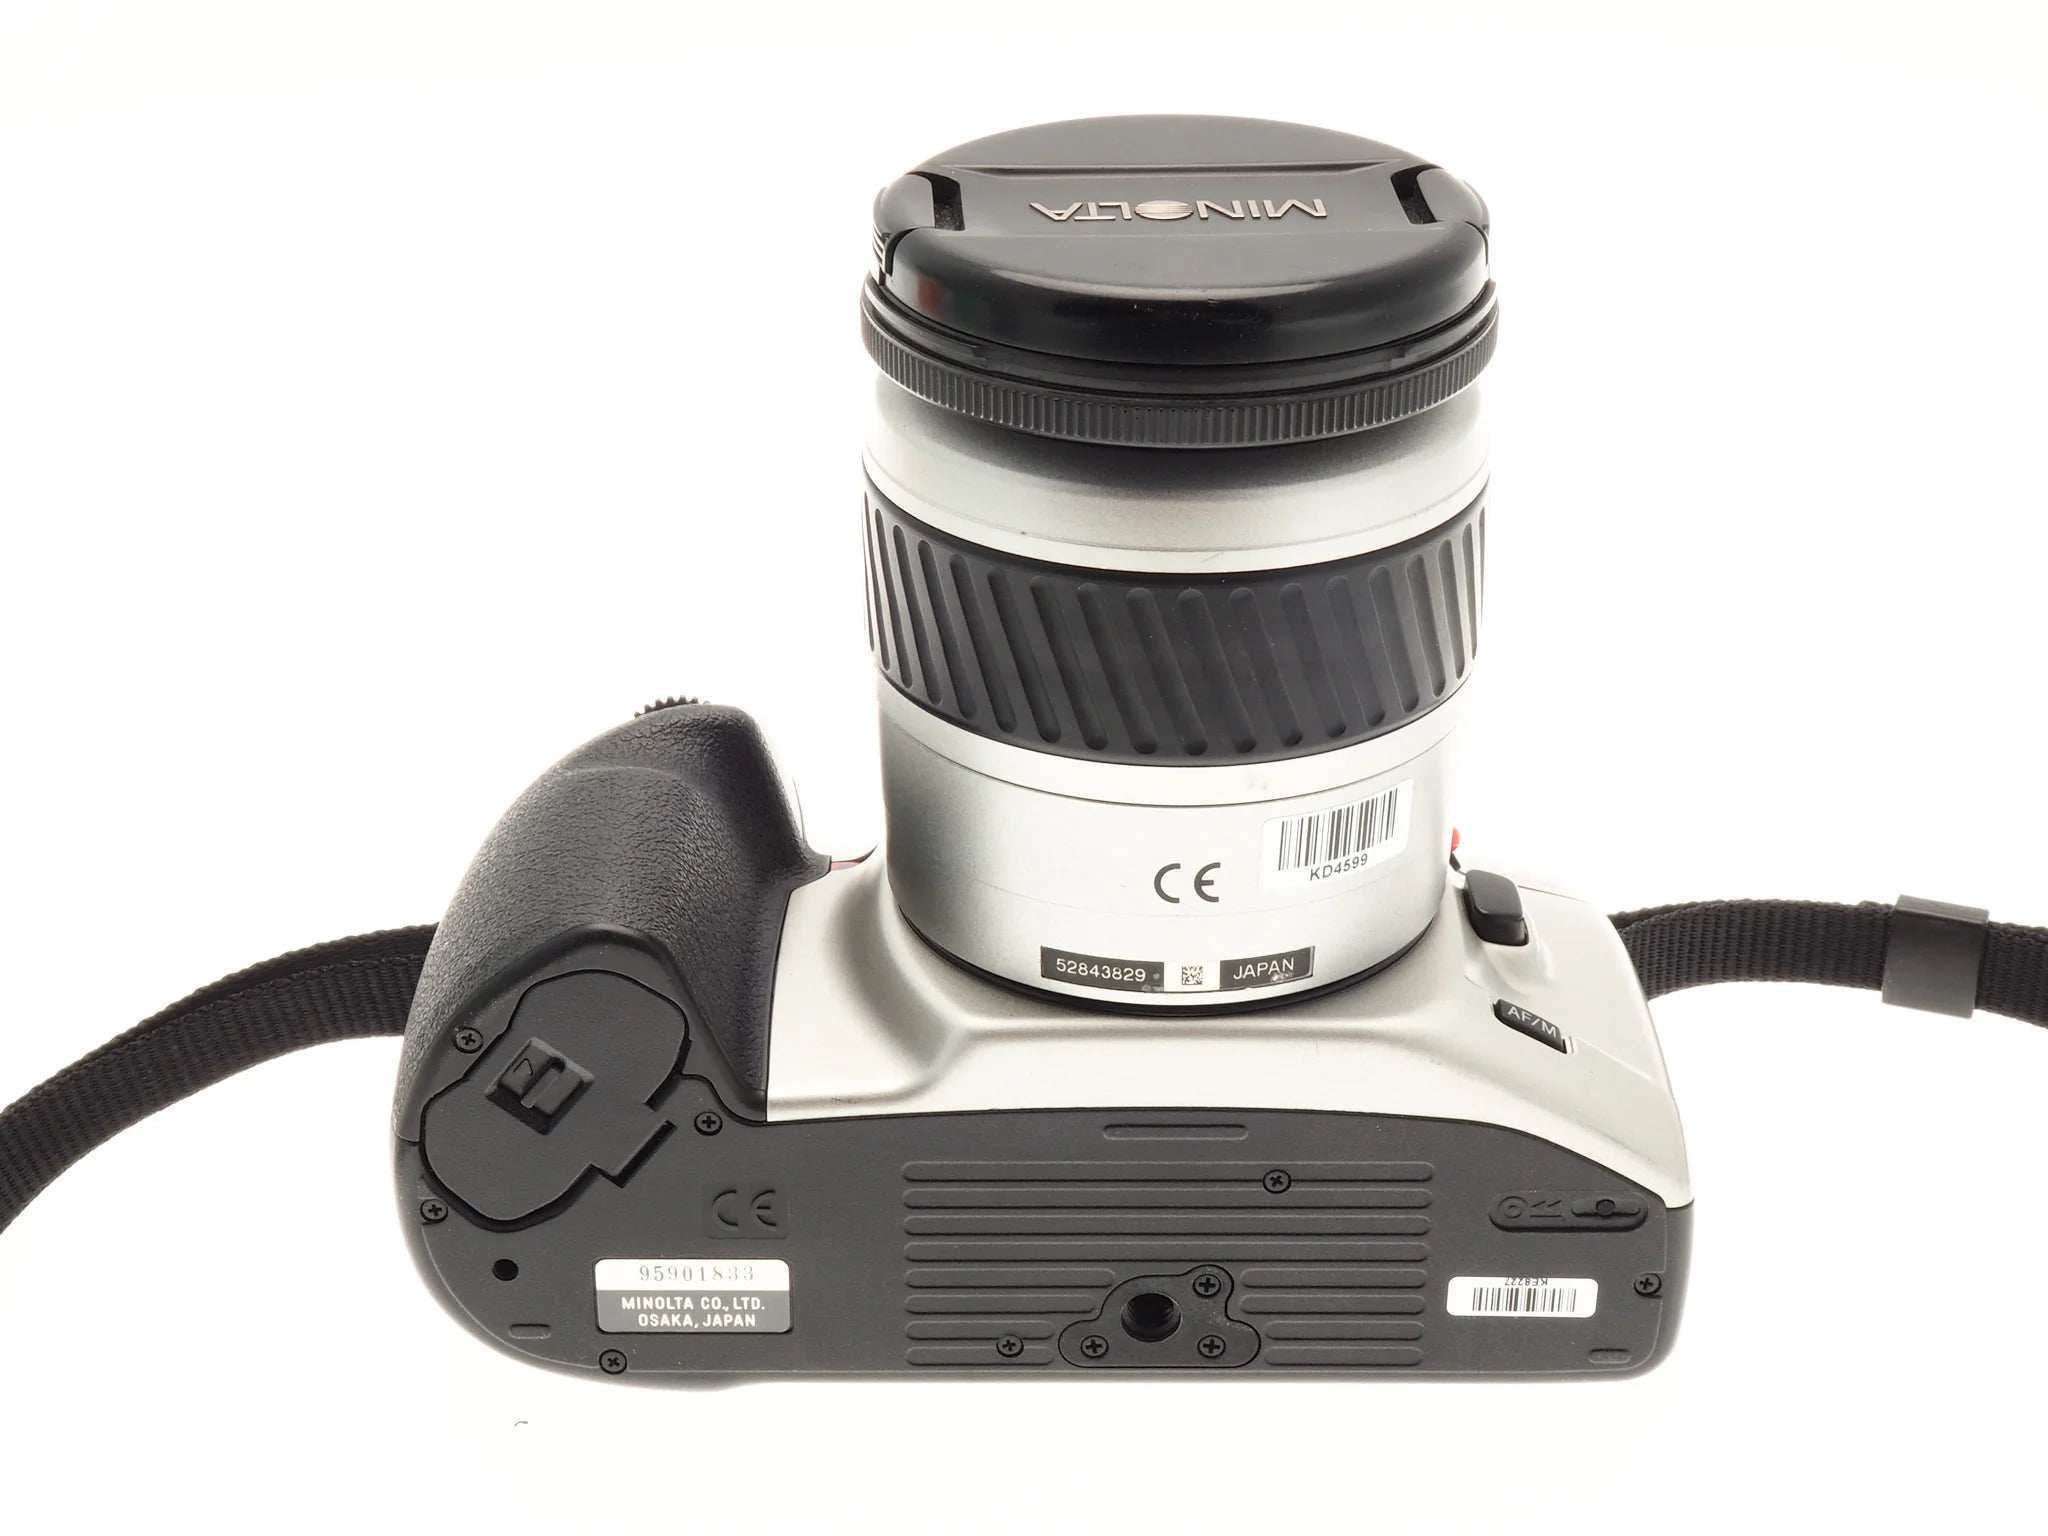 Minolta Dynax 500si - 35mm Film Camera - with 6 month warranty